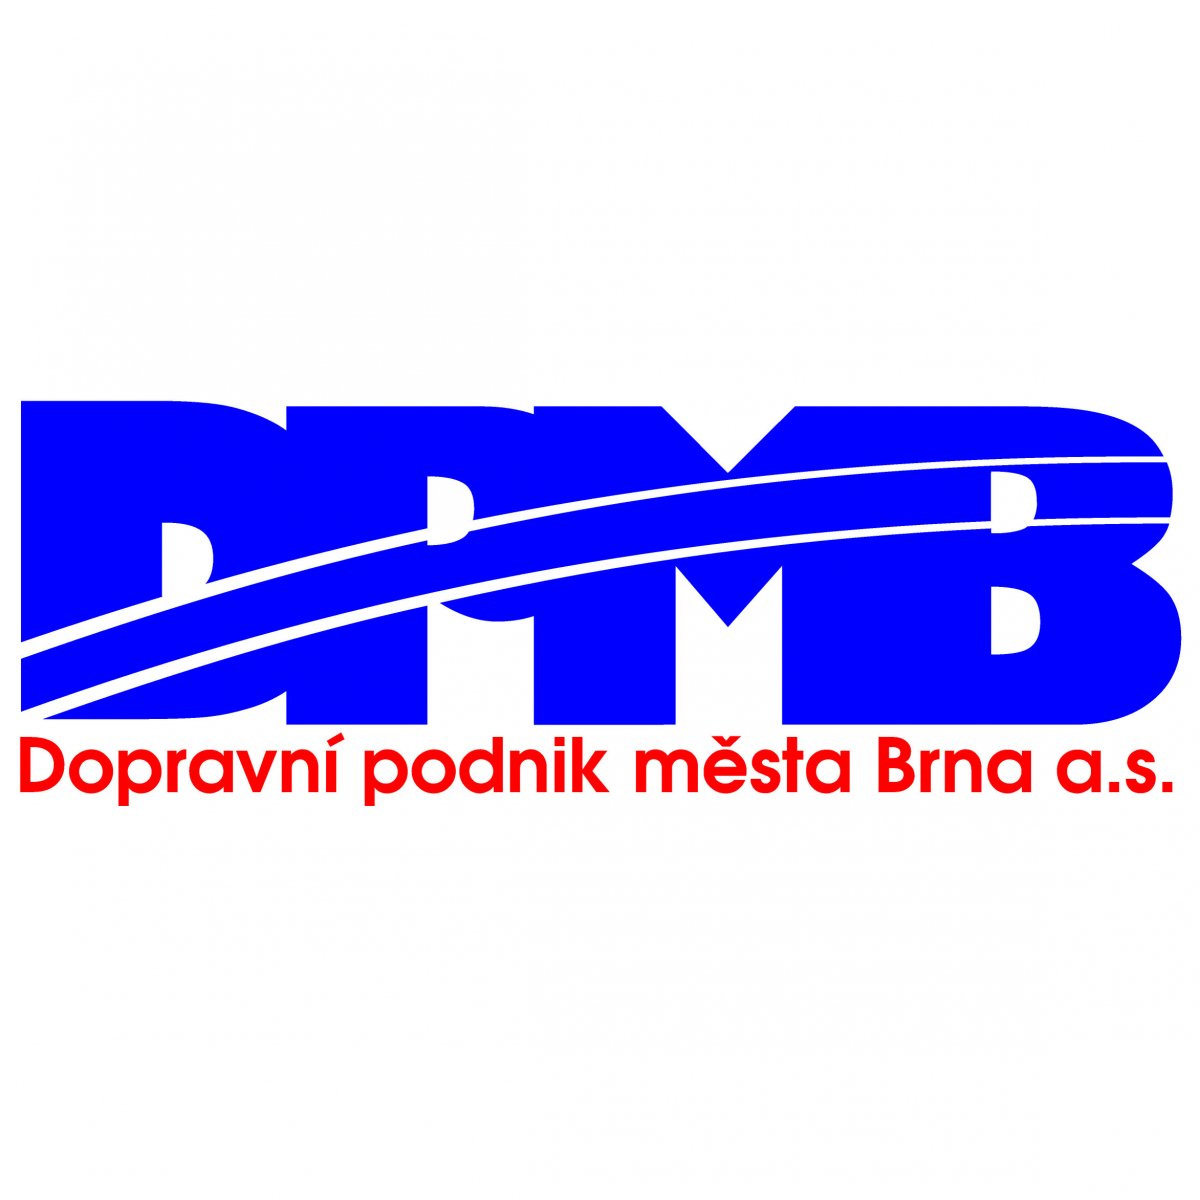 Logo DPMB